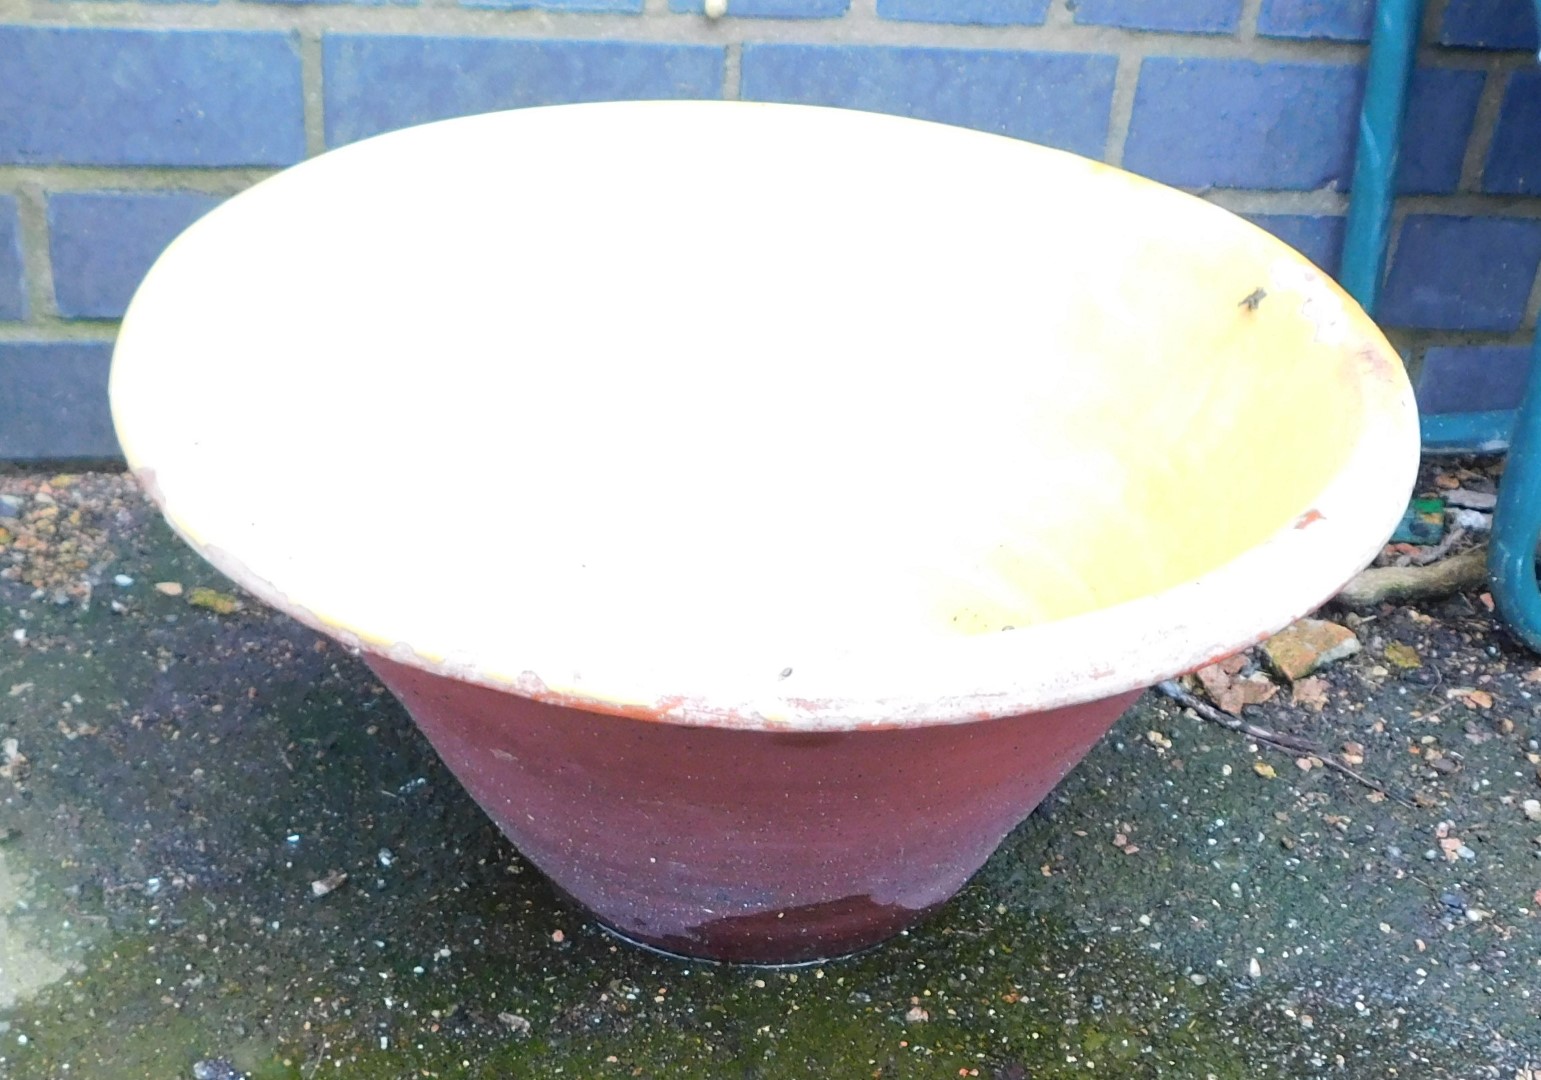 A large ceramic garden planter or pancheon, 49cm diameter.